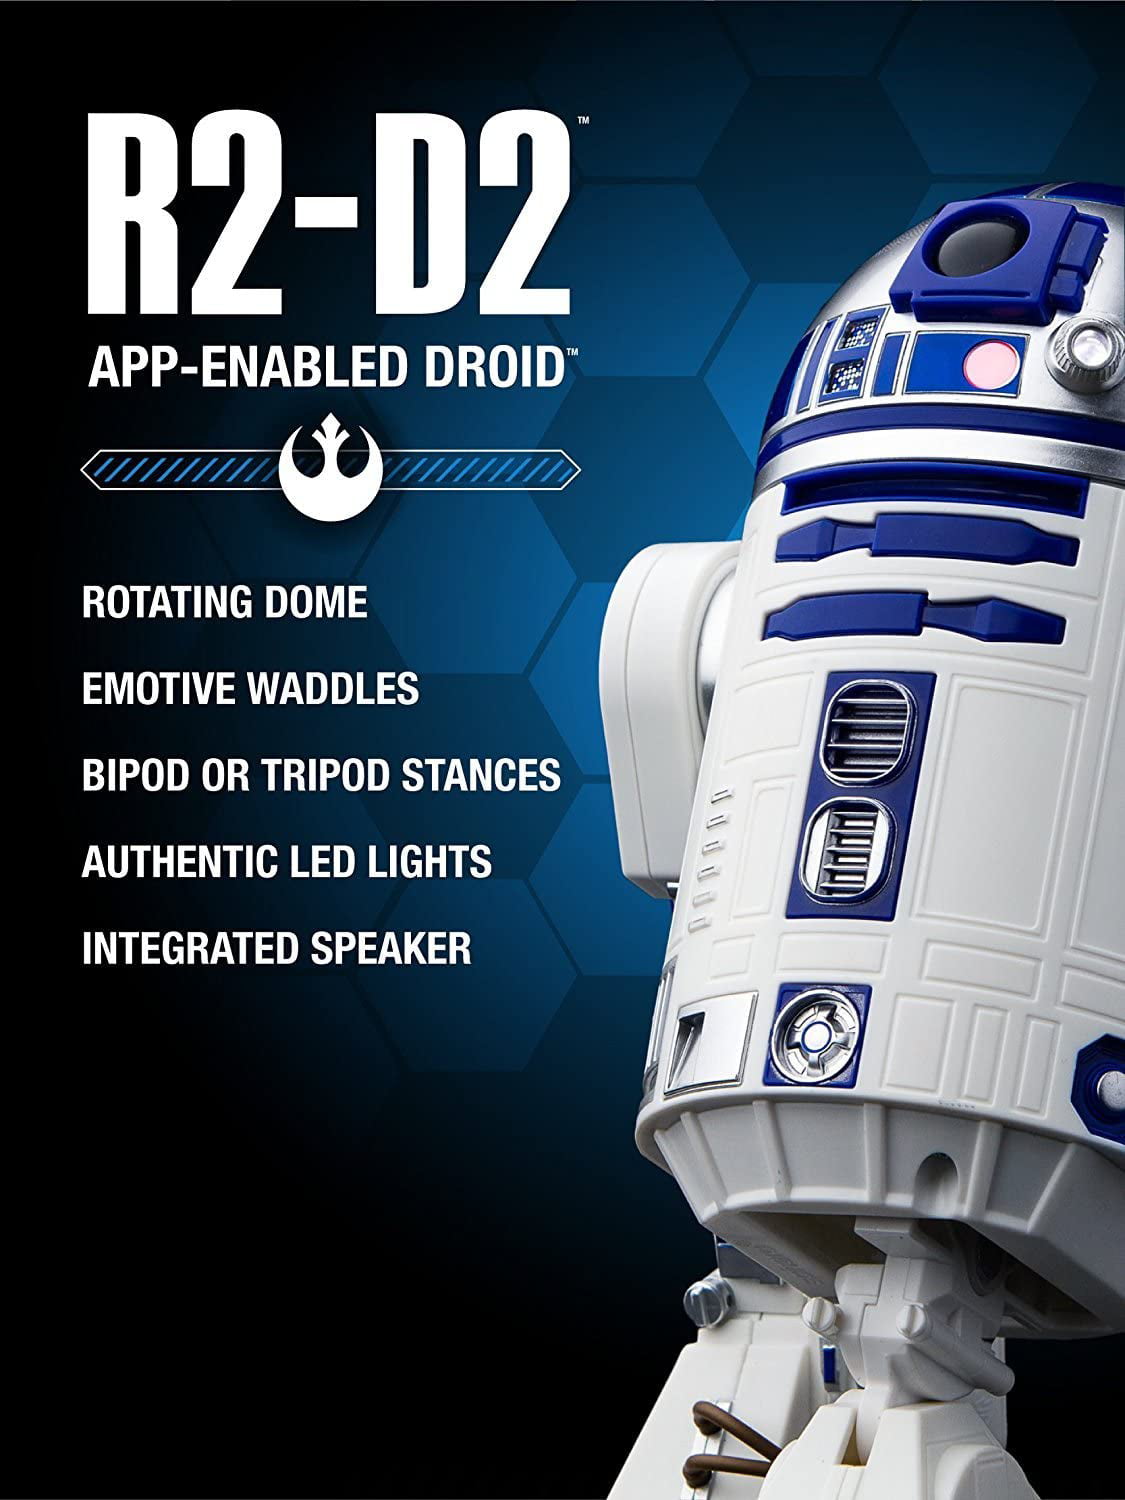 Genuine Star Wars Droid R2-D2 Talking Figure Robot - 10 1/2